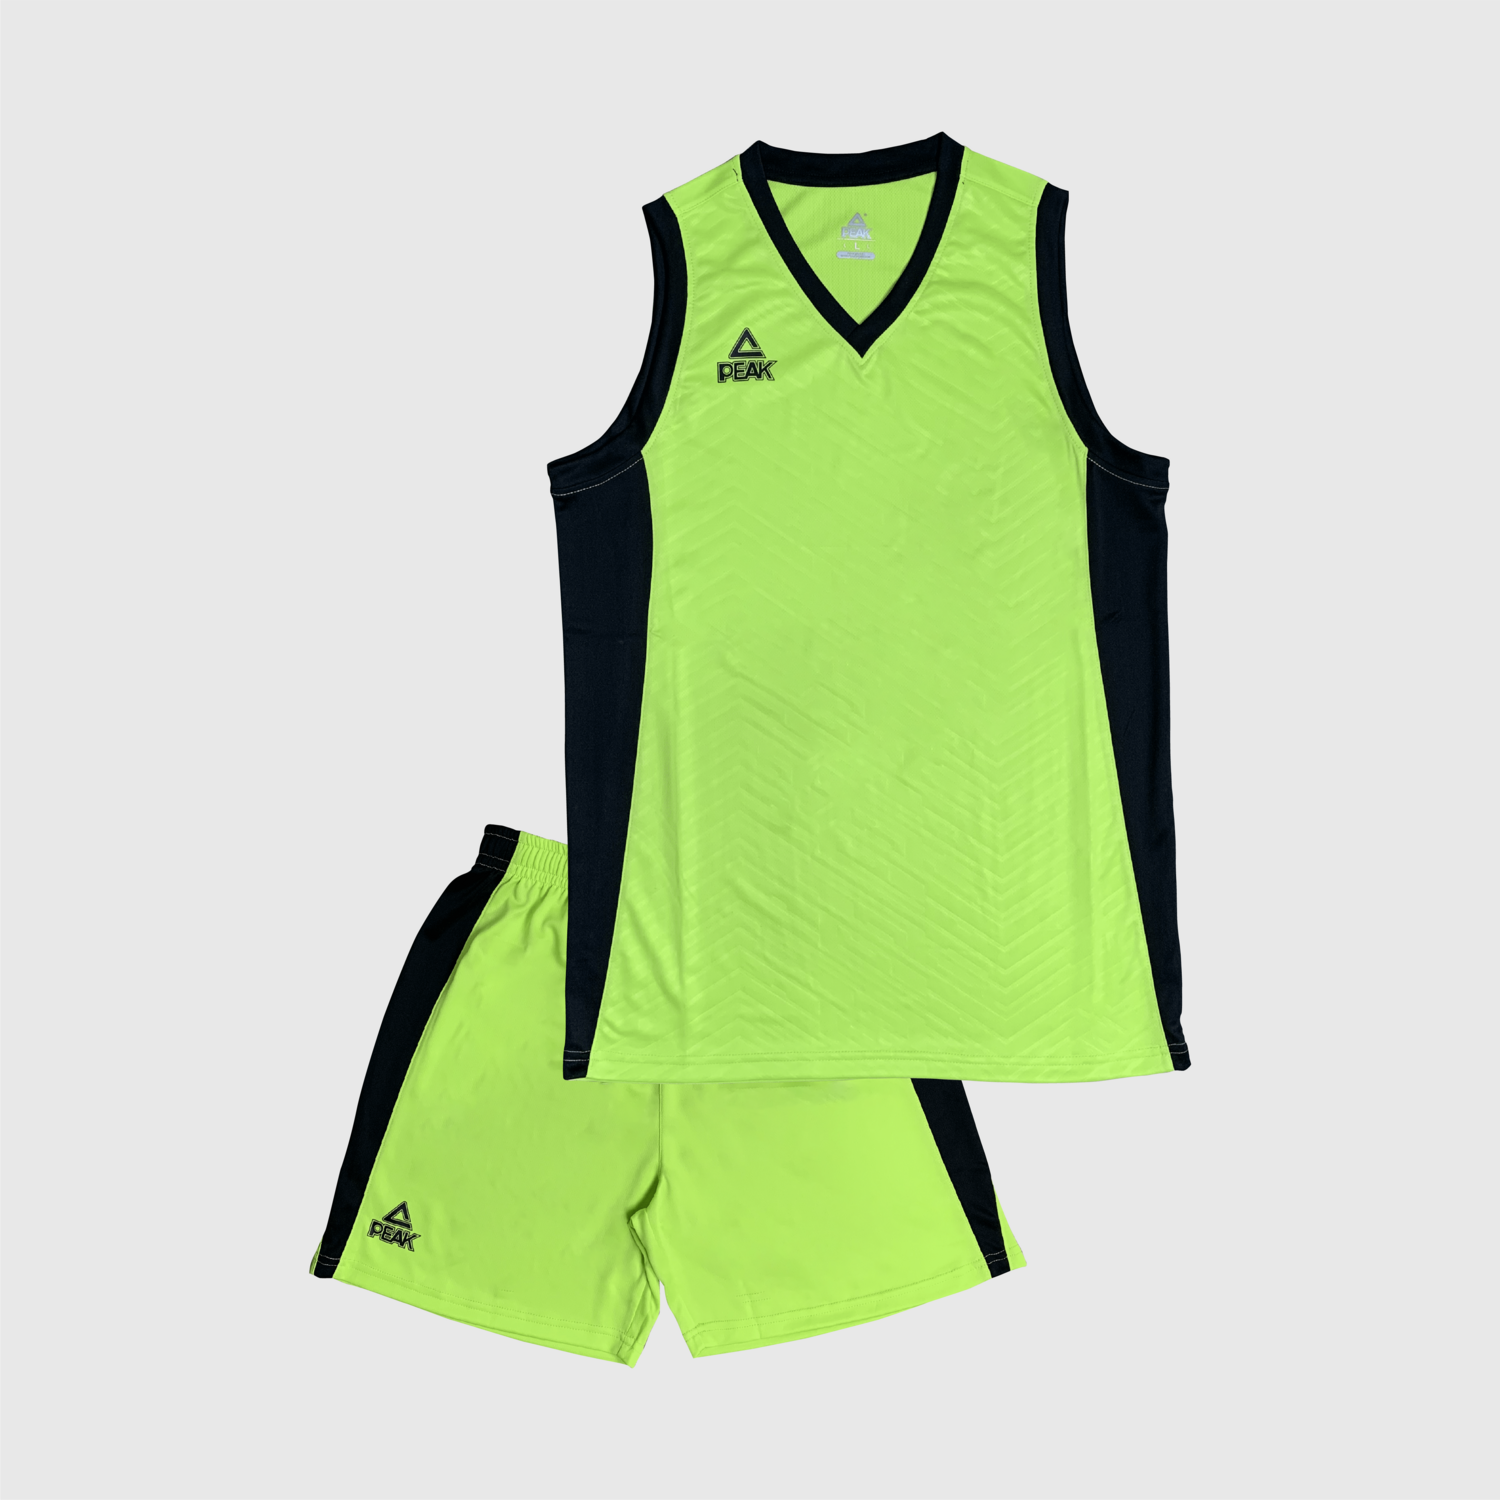 PEAK Basketball Jersey Set - Green